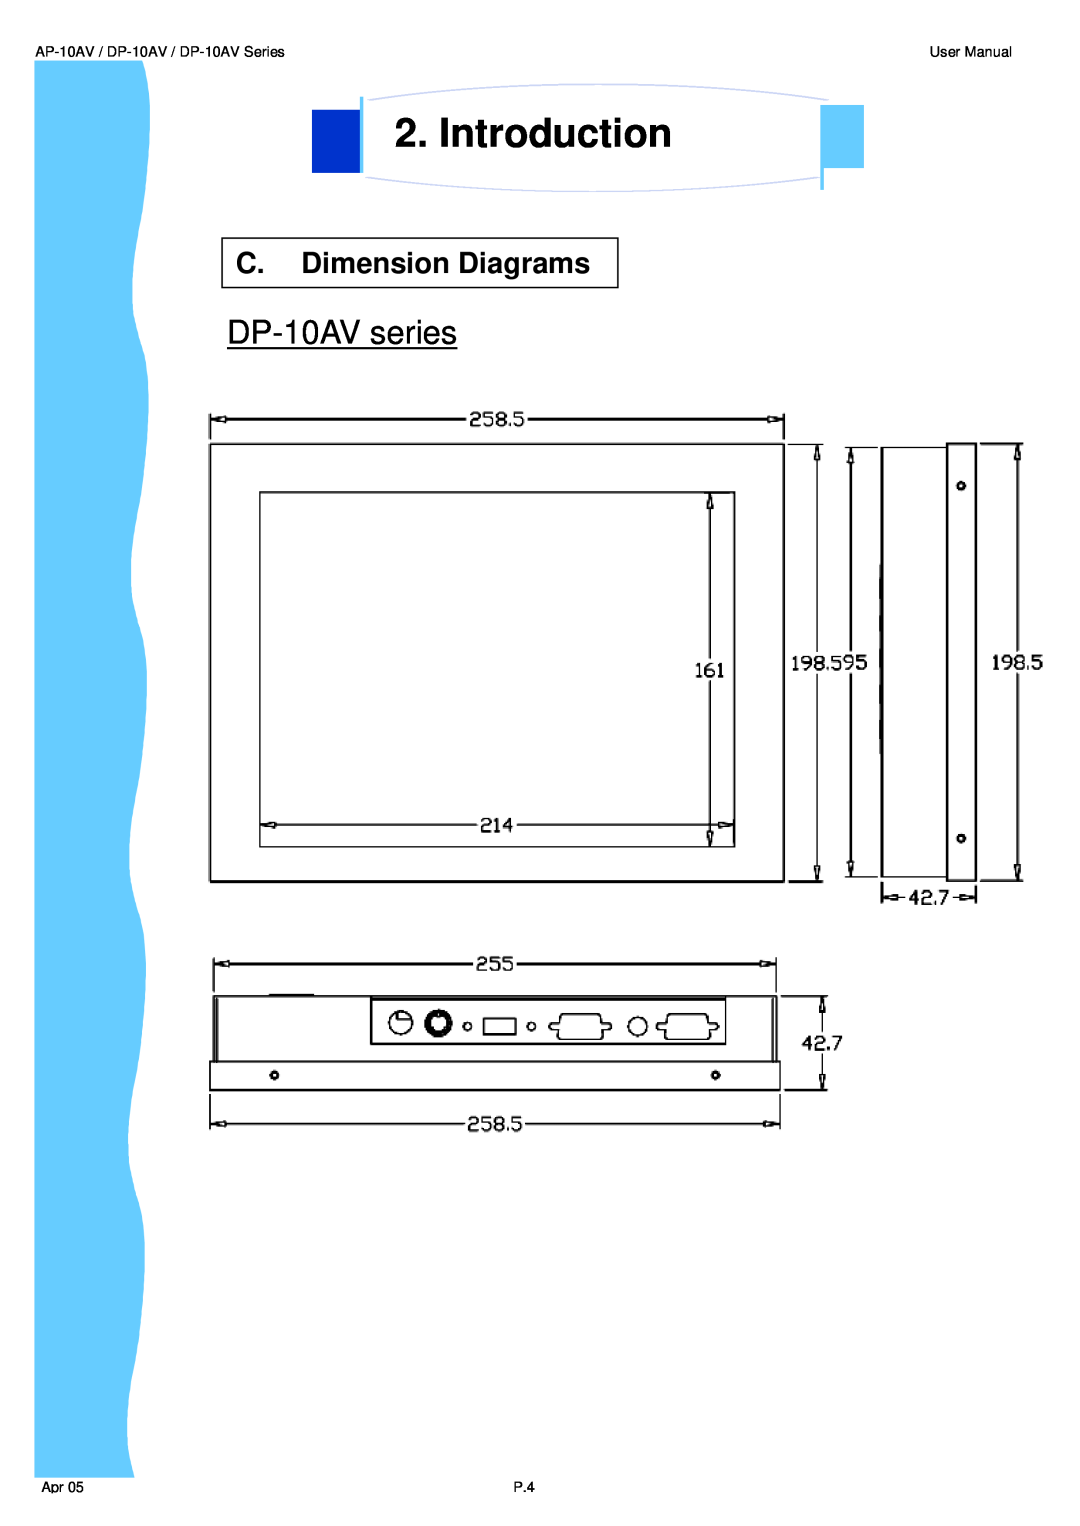 3M UMUV.10-045V2 DP-10AV series, Introduction, C. Dimension Diagrams, AP-10AV / DP-10AV / DP-10AV Series, User Manual 